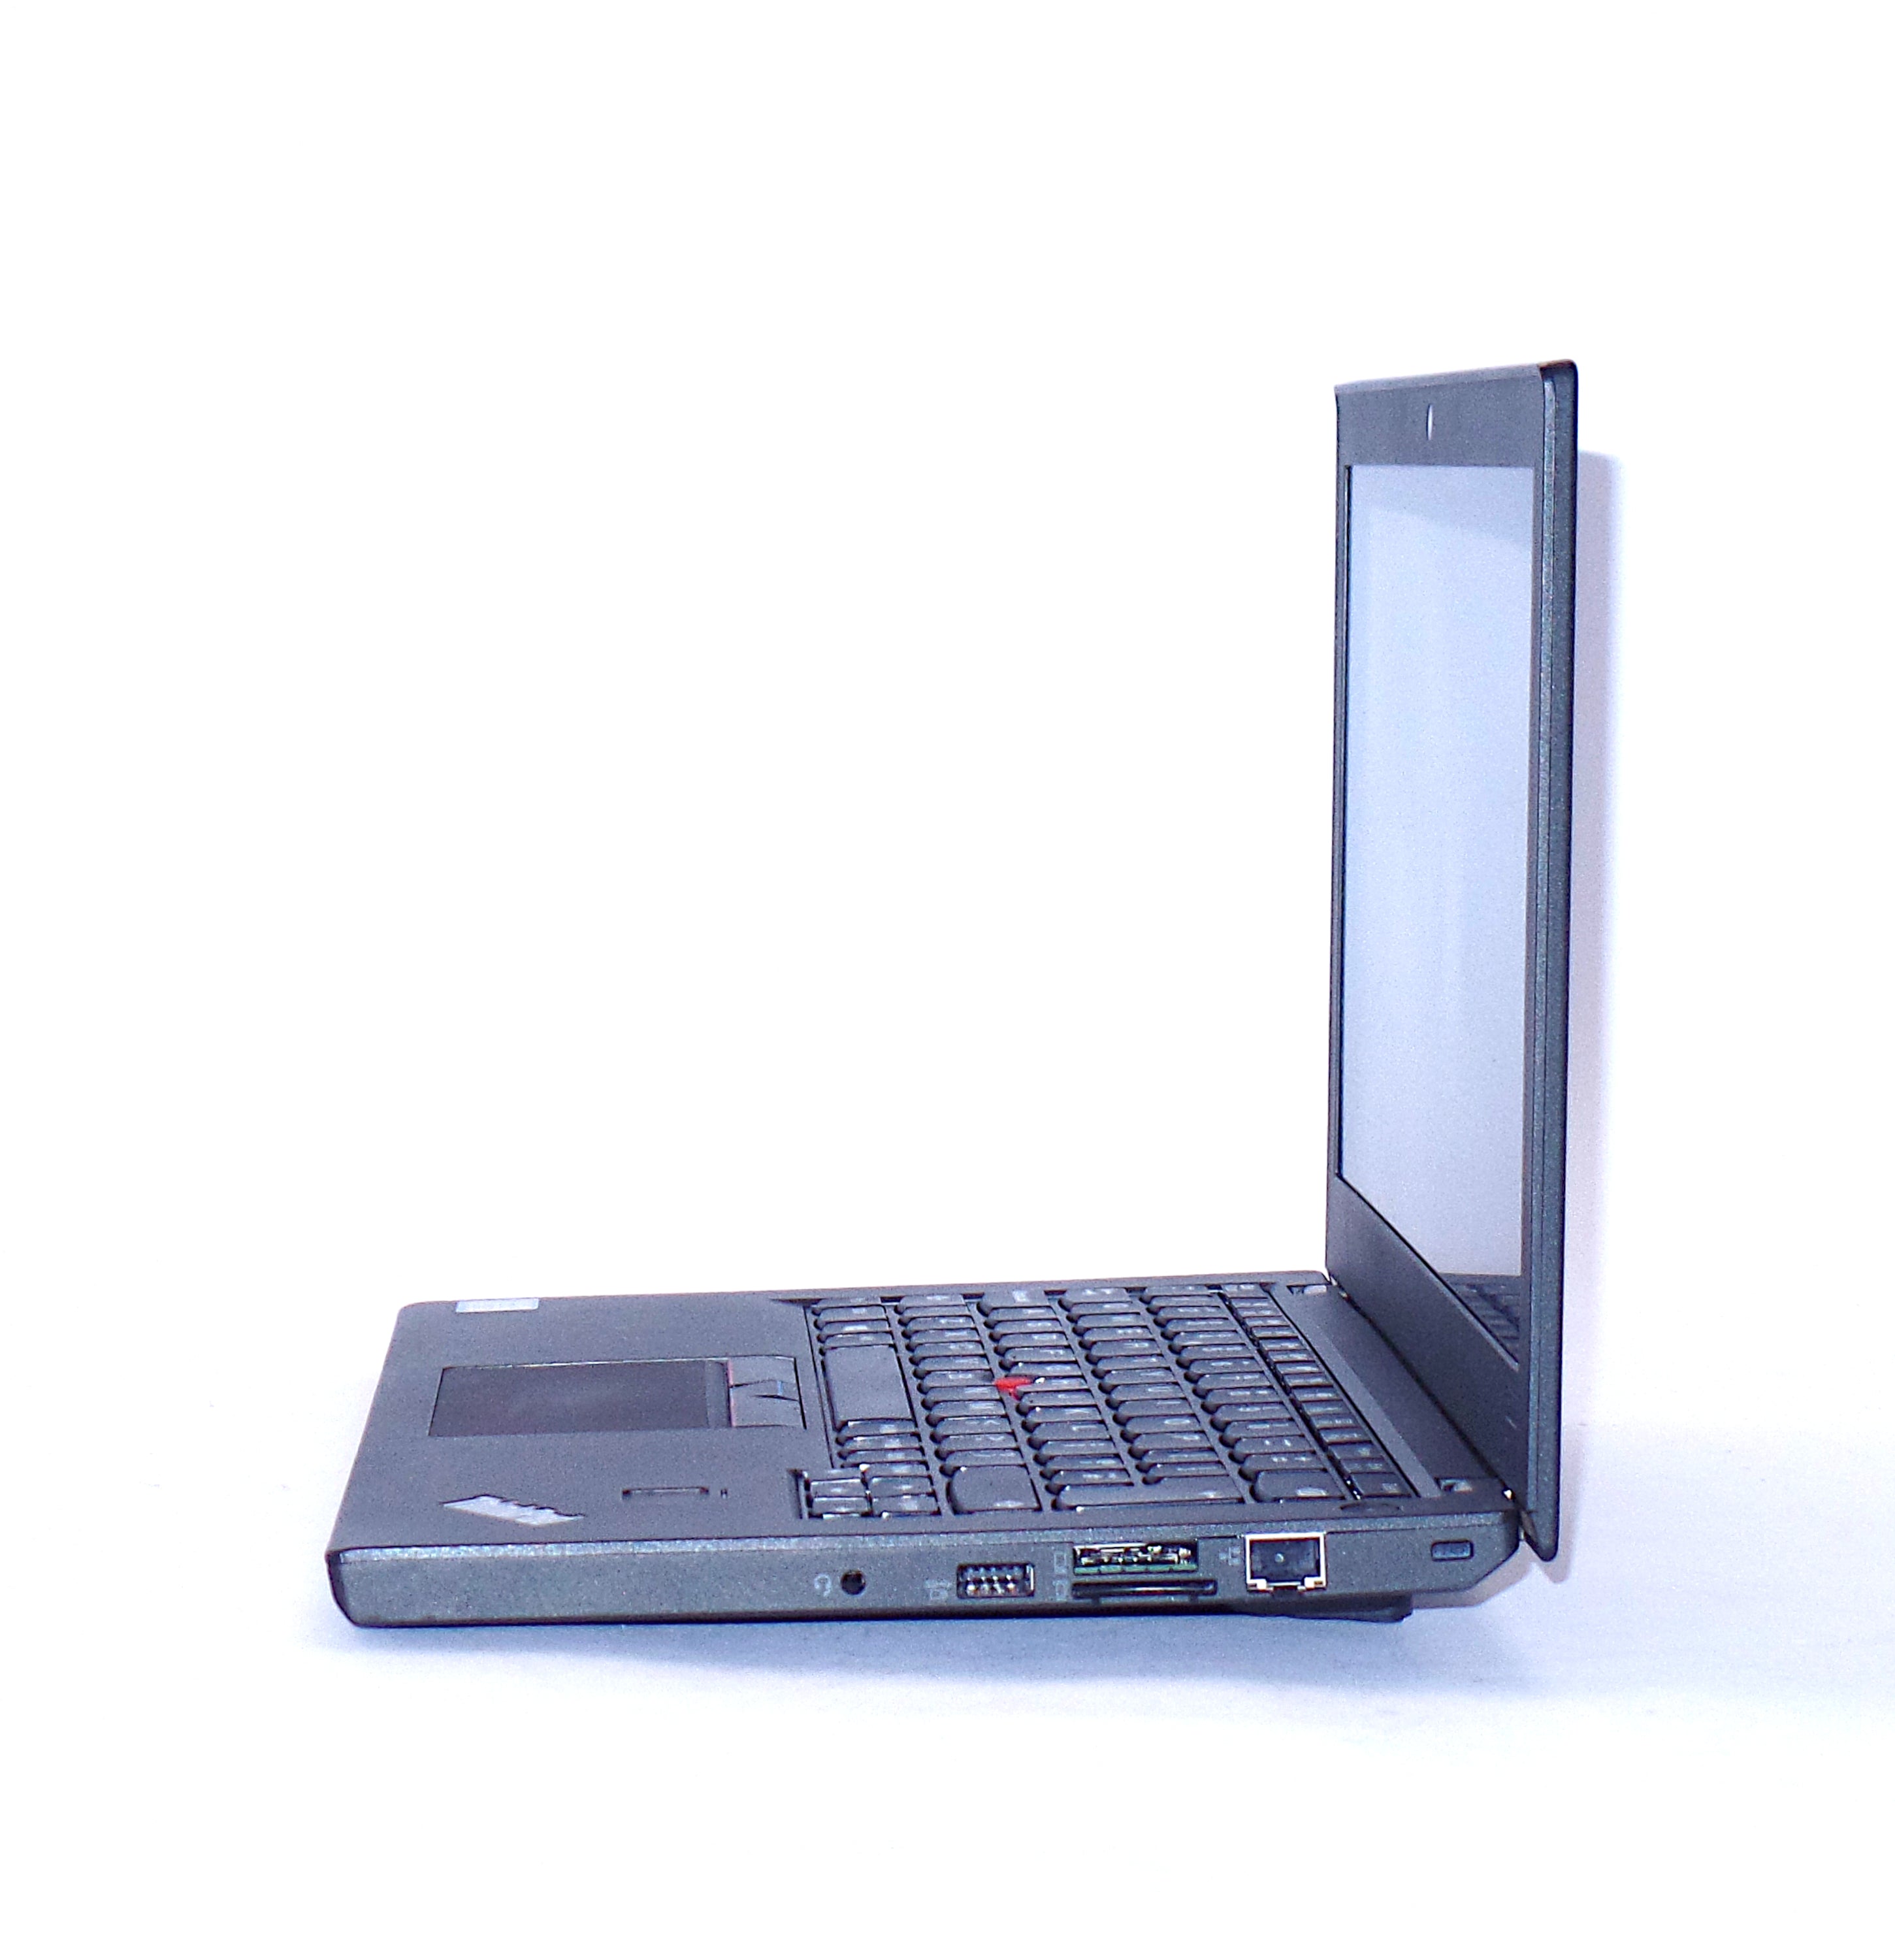 Lenovo ThinkPad X270 Laptop, 12.5" i5 7th Gen, 8GB RAM, 256GB SSD